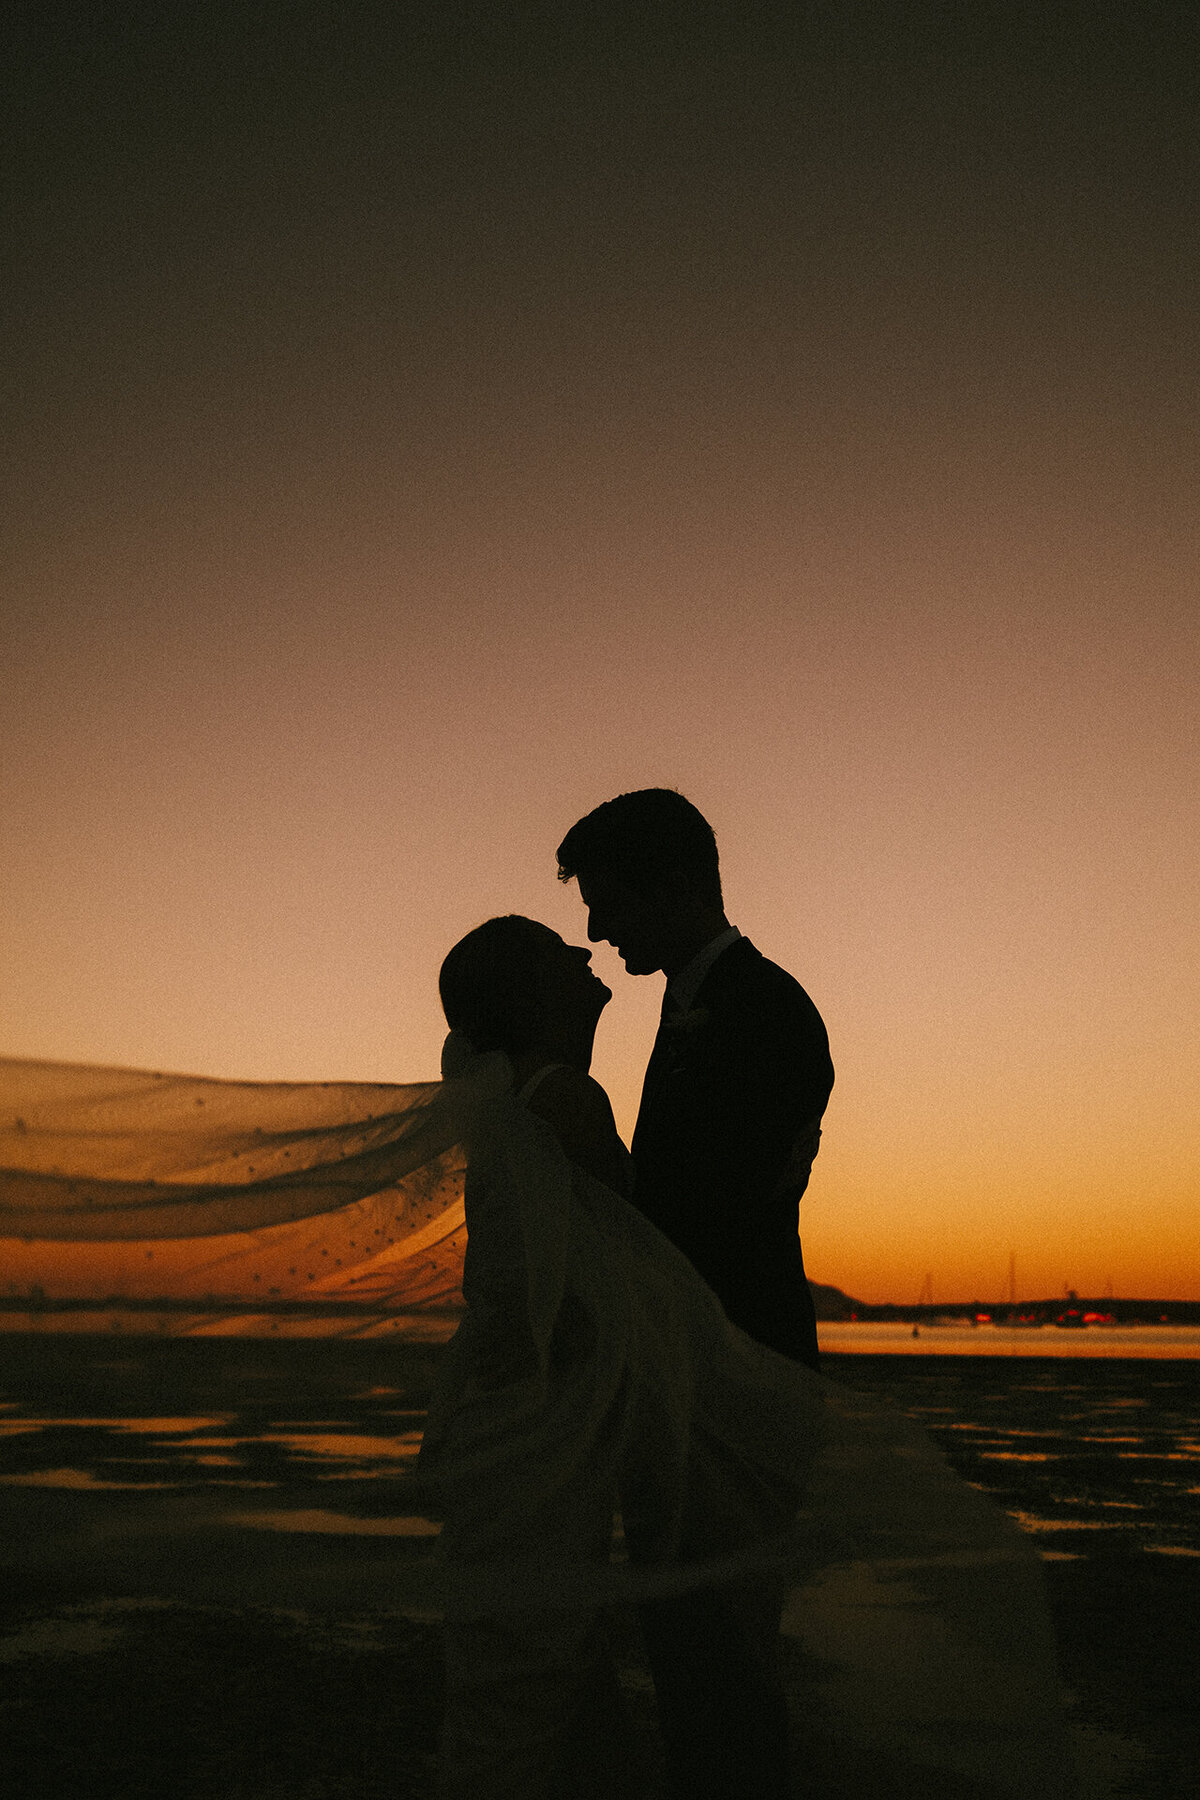 A dreamy sunset wedding portrait taken by Eilish Burt